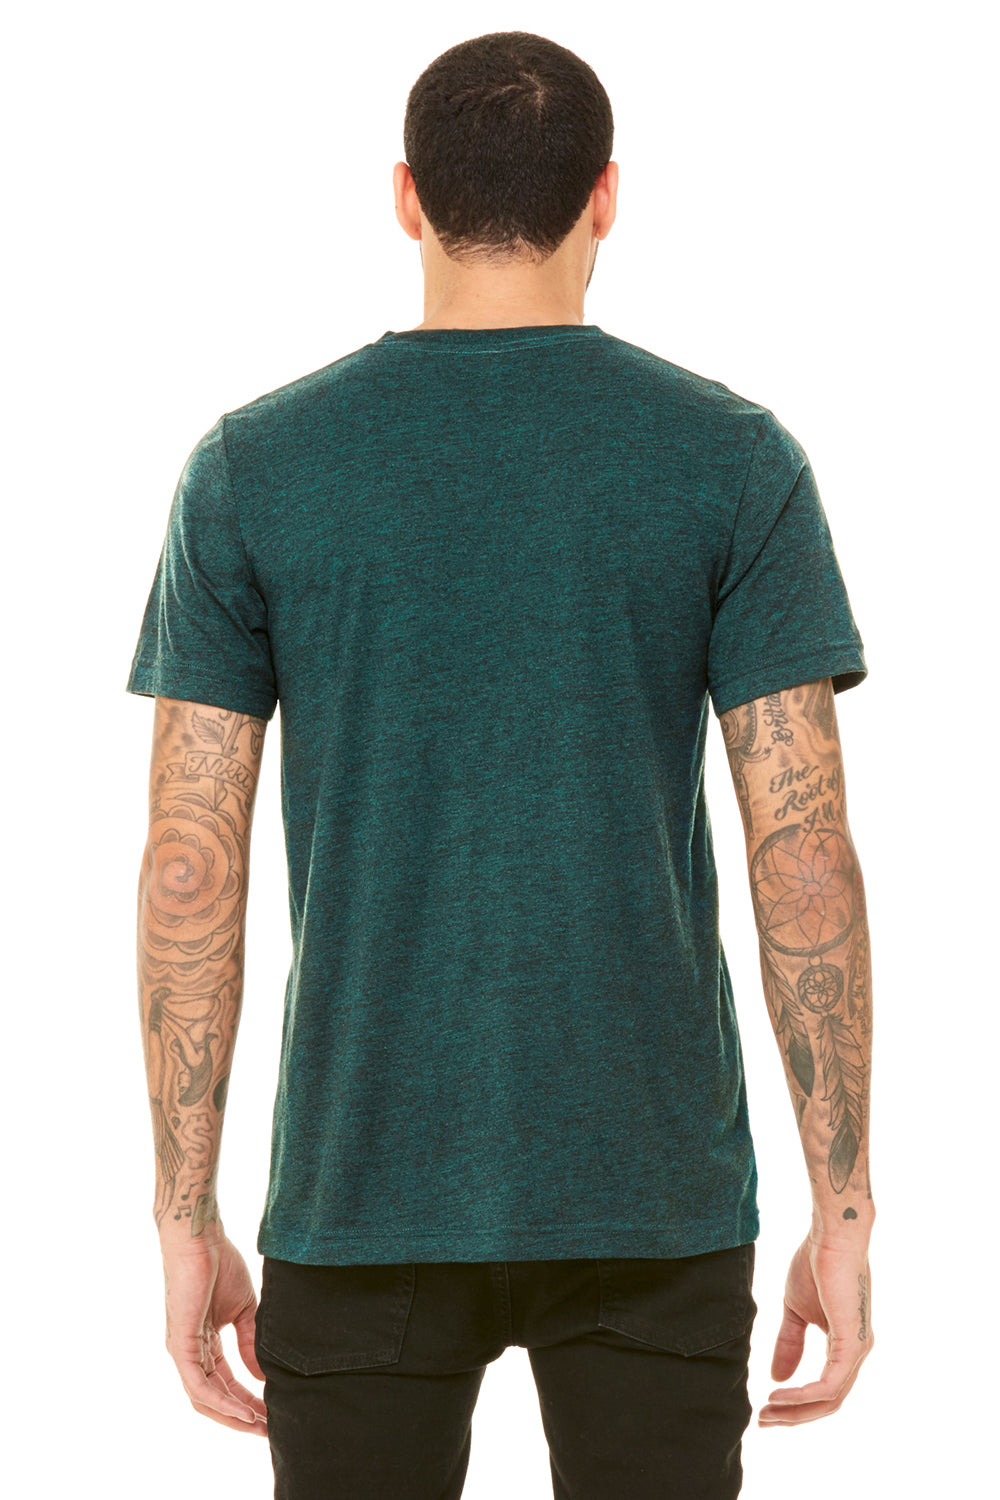 Bella + Canvas 3415C Mens Short Sleeve V-Neck T-Shirt Emerald Green Back